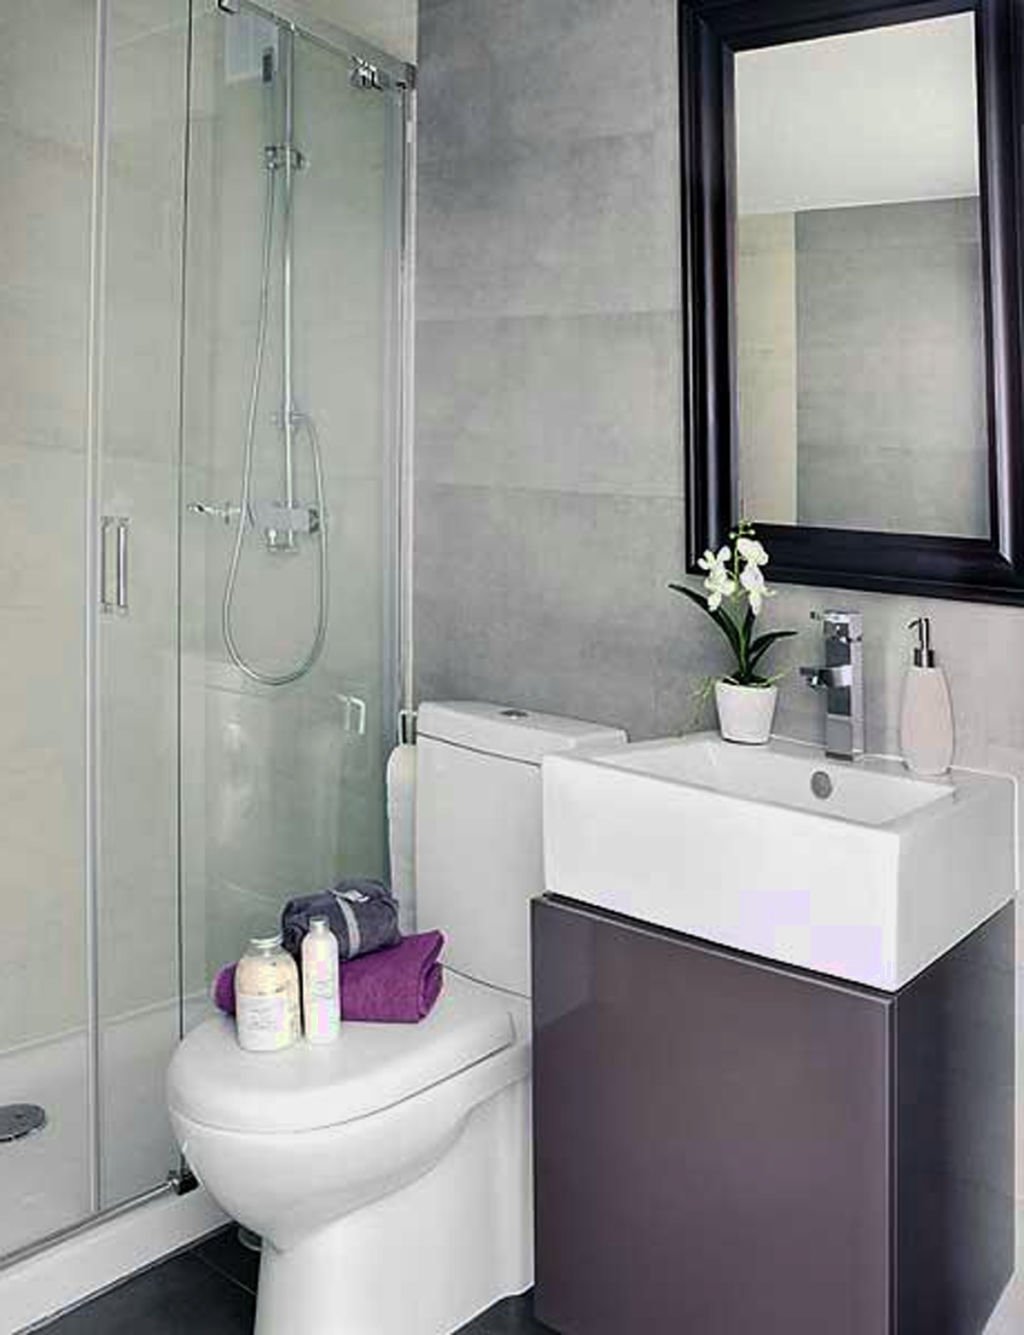 10 Perfect Small Bathroom Ideas Photo Gallery ideal small bathroom ideas photo gallery for resident decoration 2022